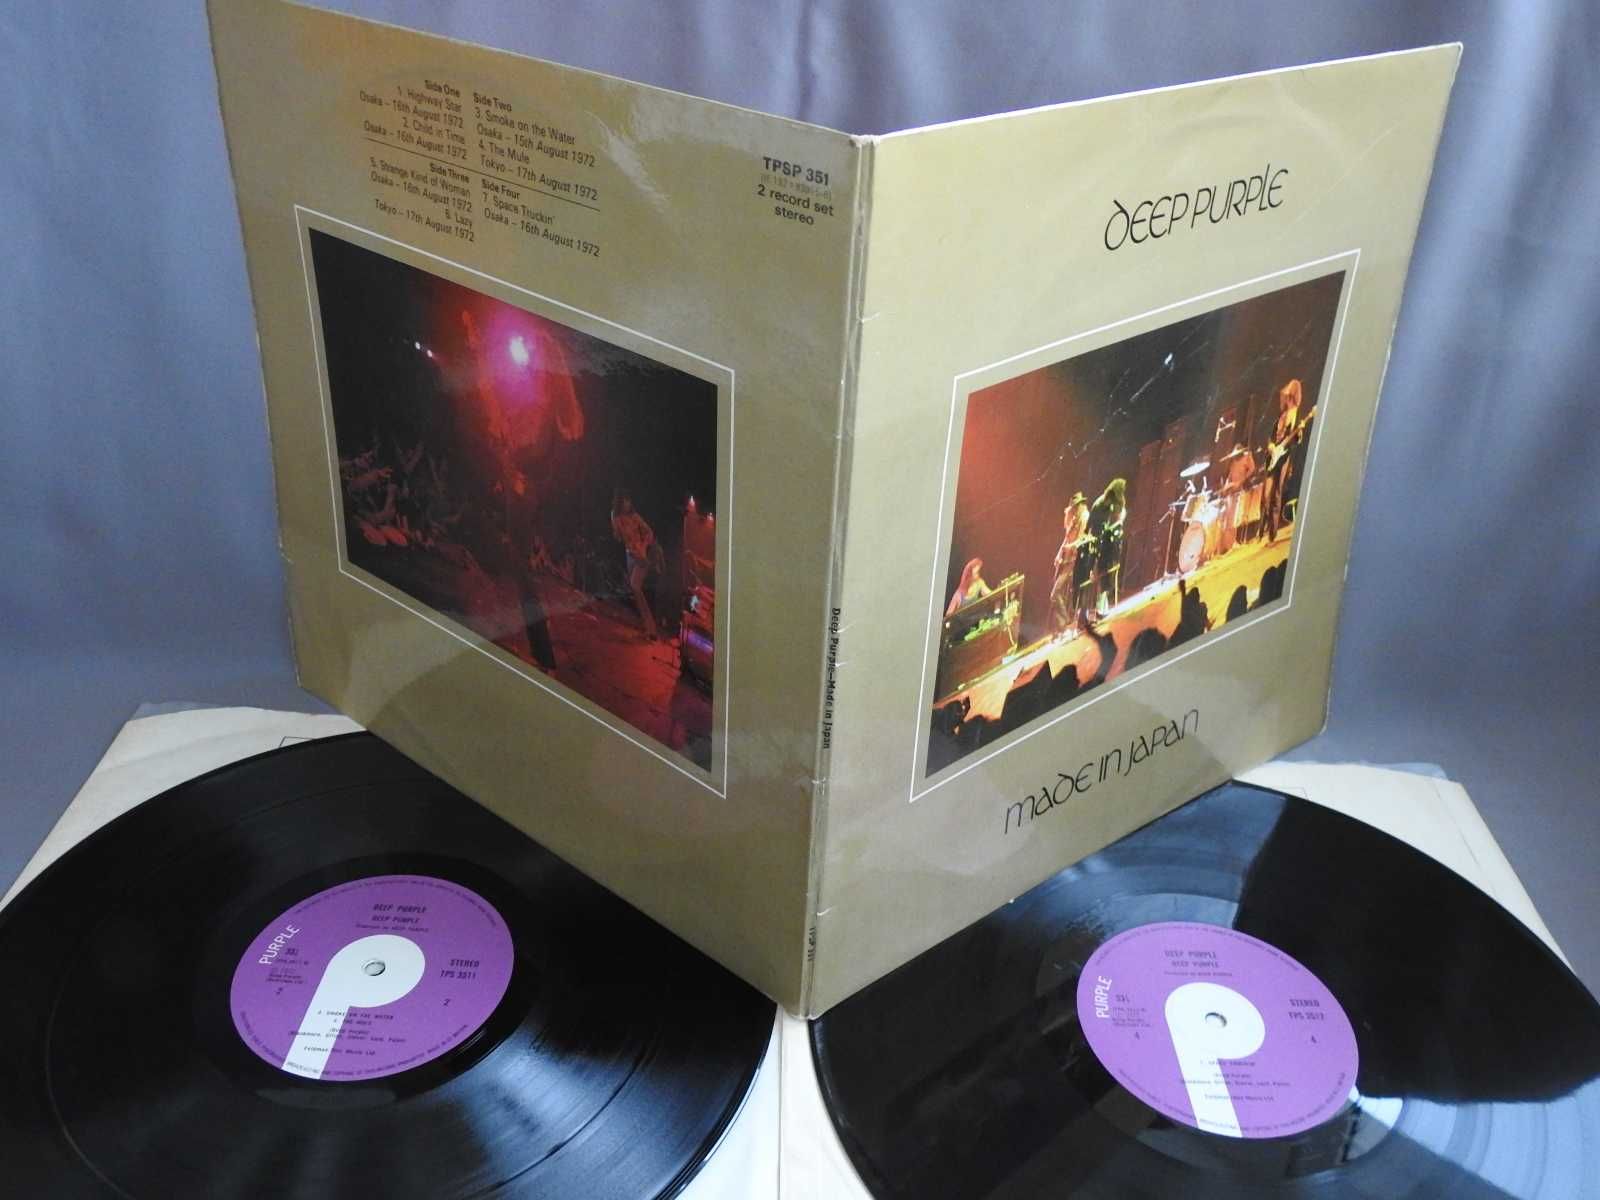 DEEP PURPLE Made in Japan 2 LP 1972 Британская пластинка UK EX+ re1973